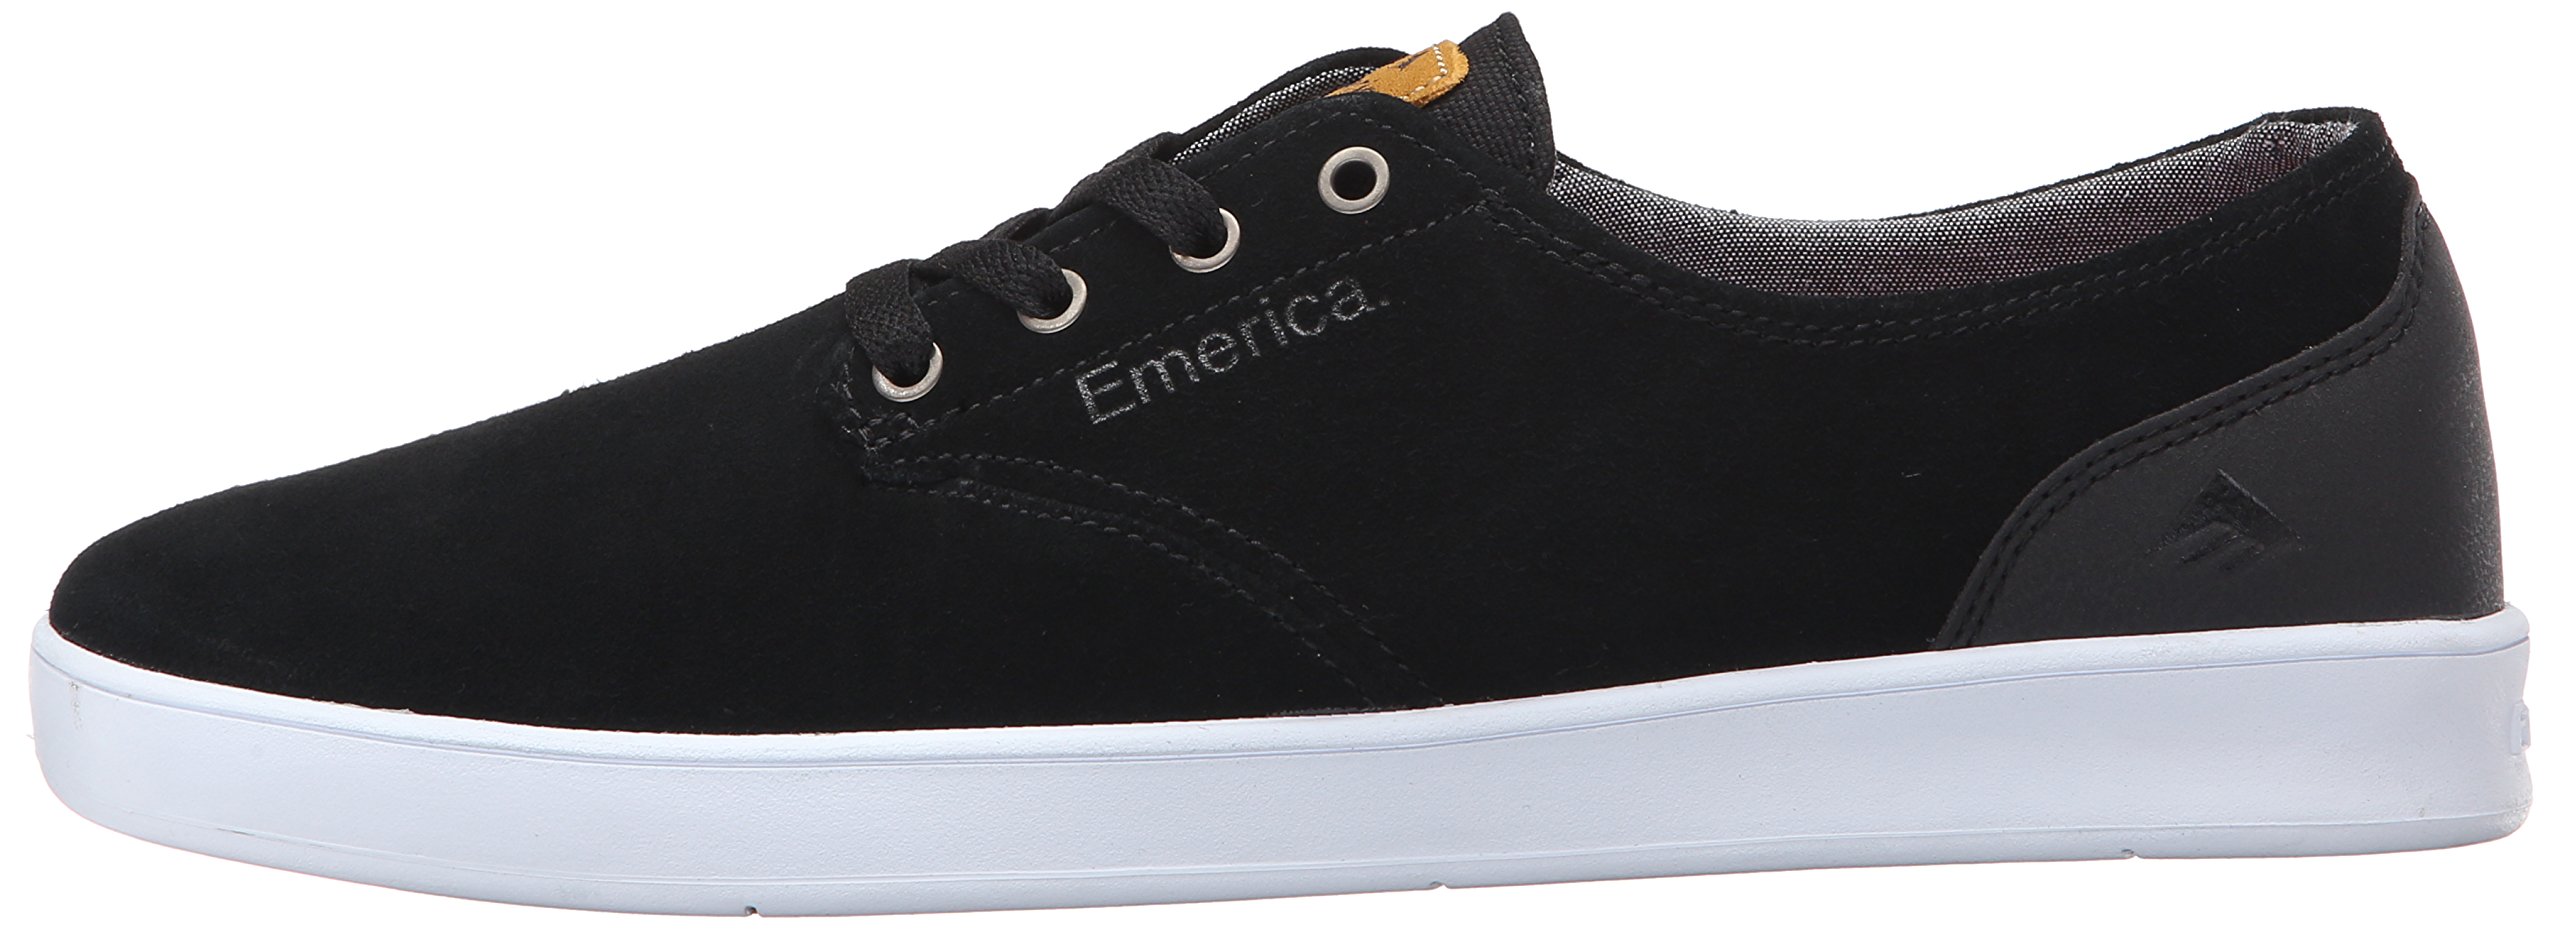 Emerica Romero Laced Skate Shoe